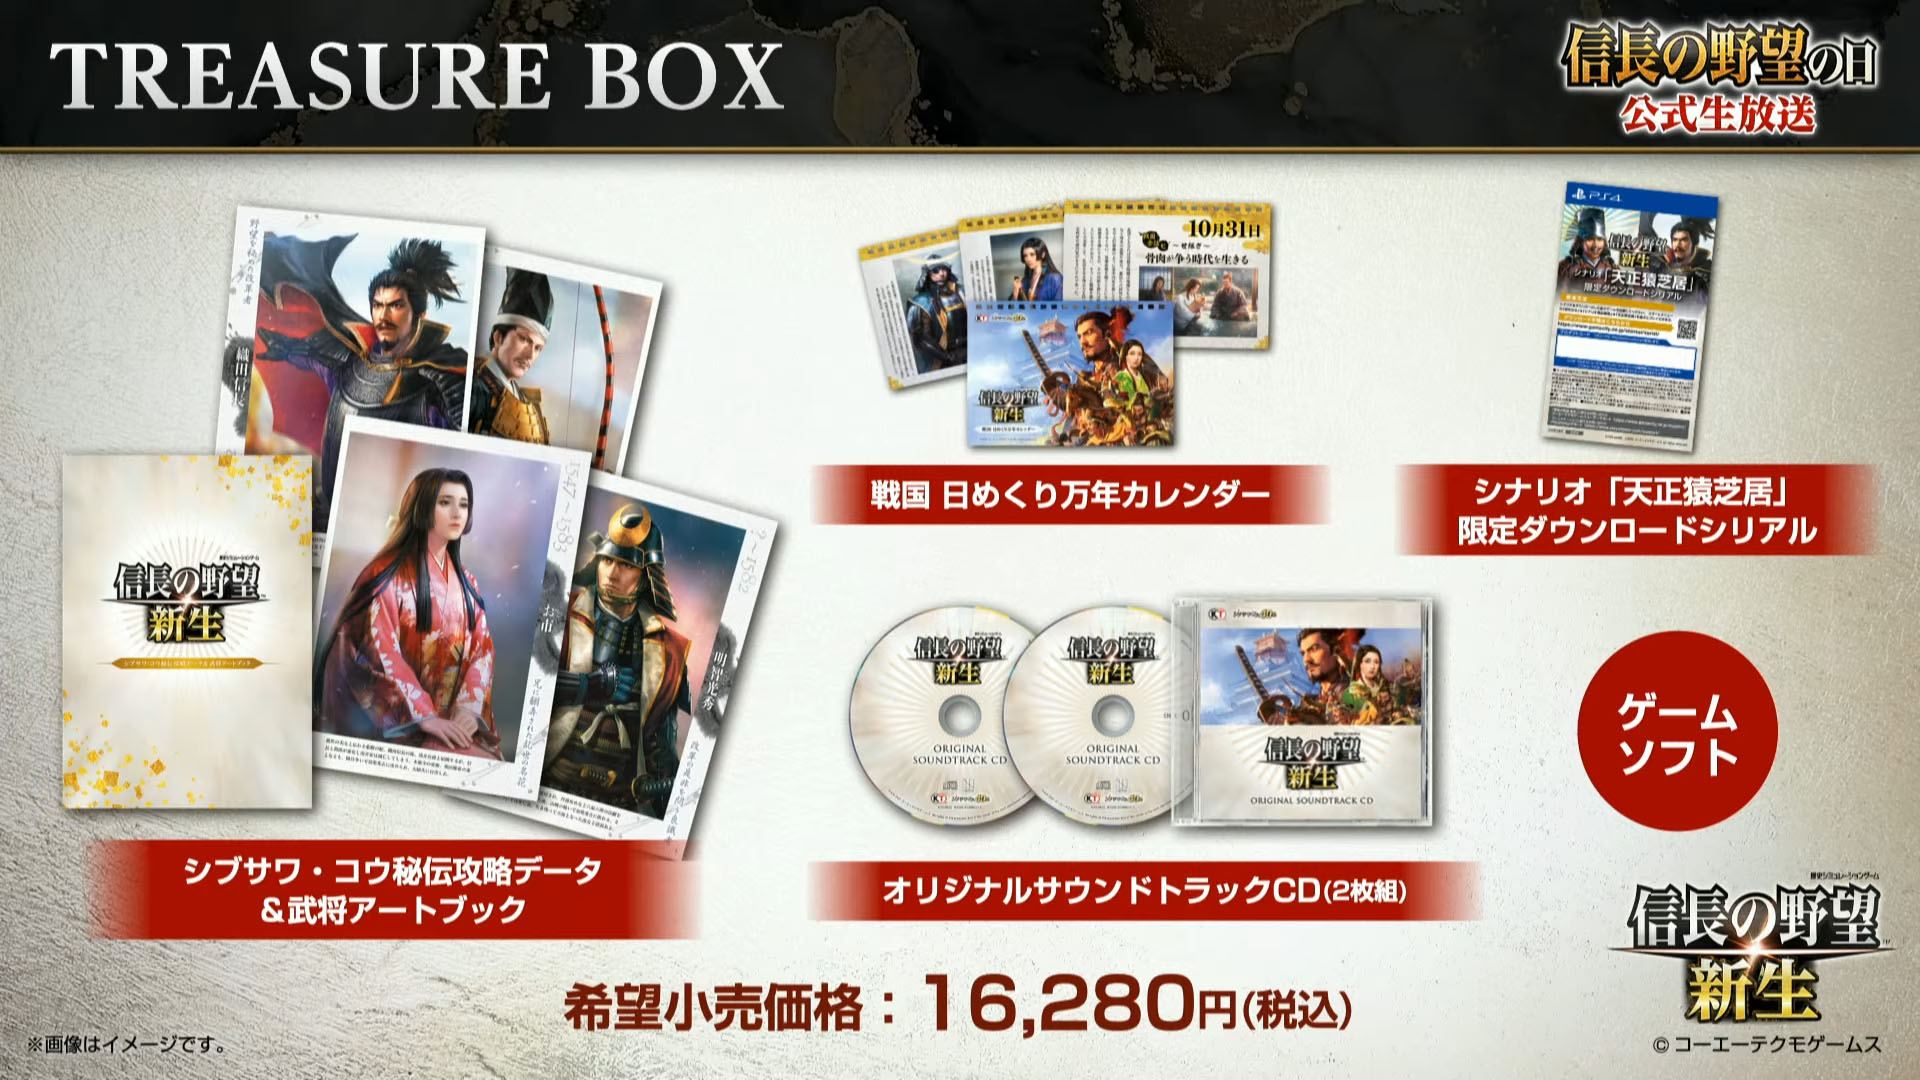 Nobunaga's Ambition: Rebirth [Treasure Box] (Limited Edition) for